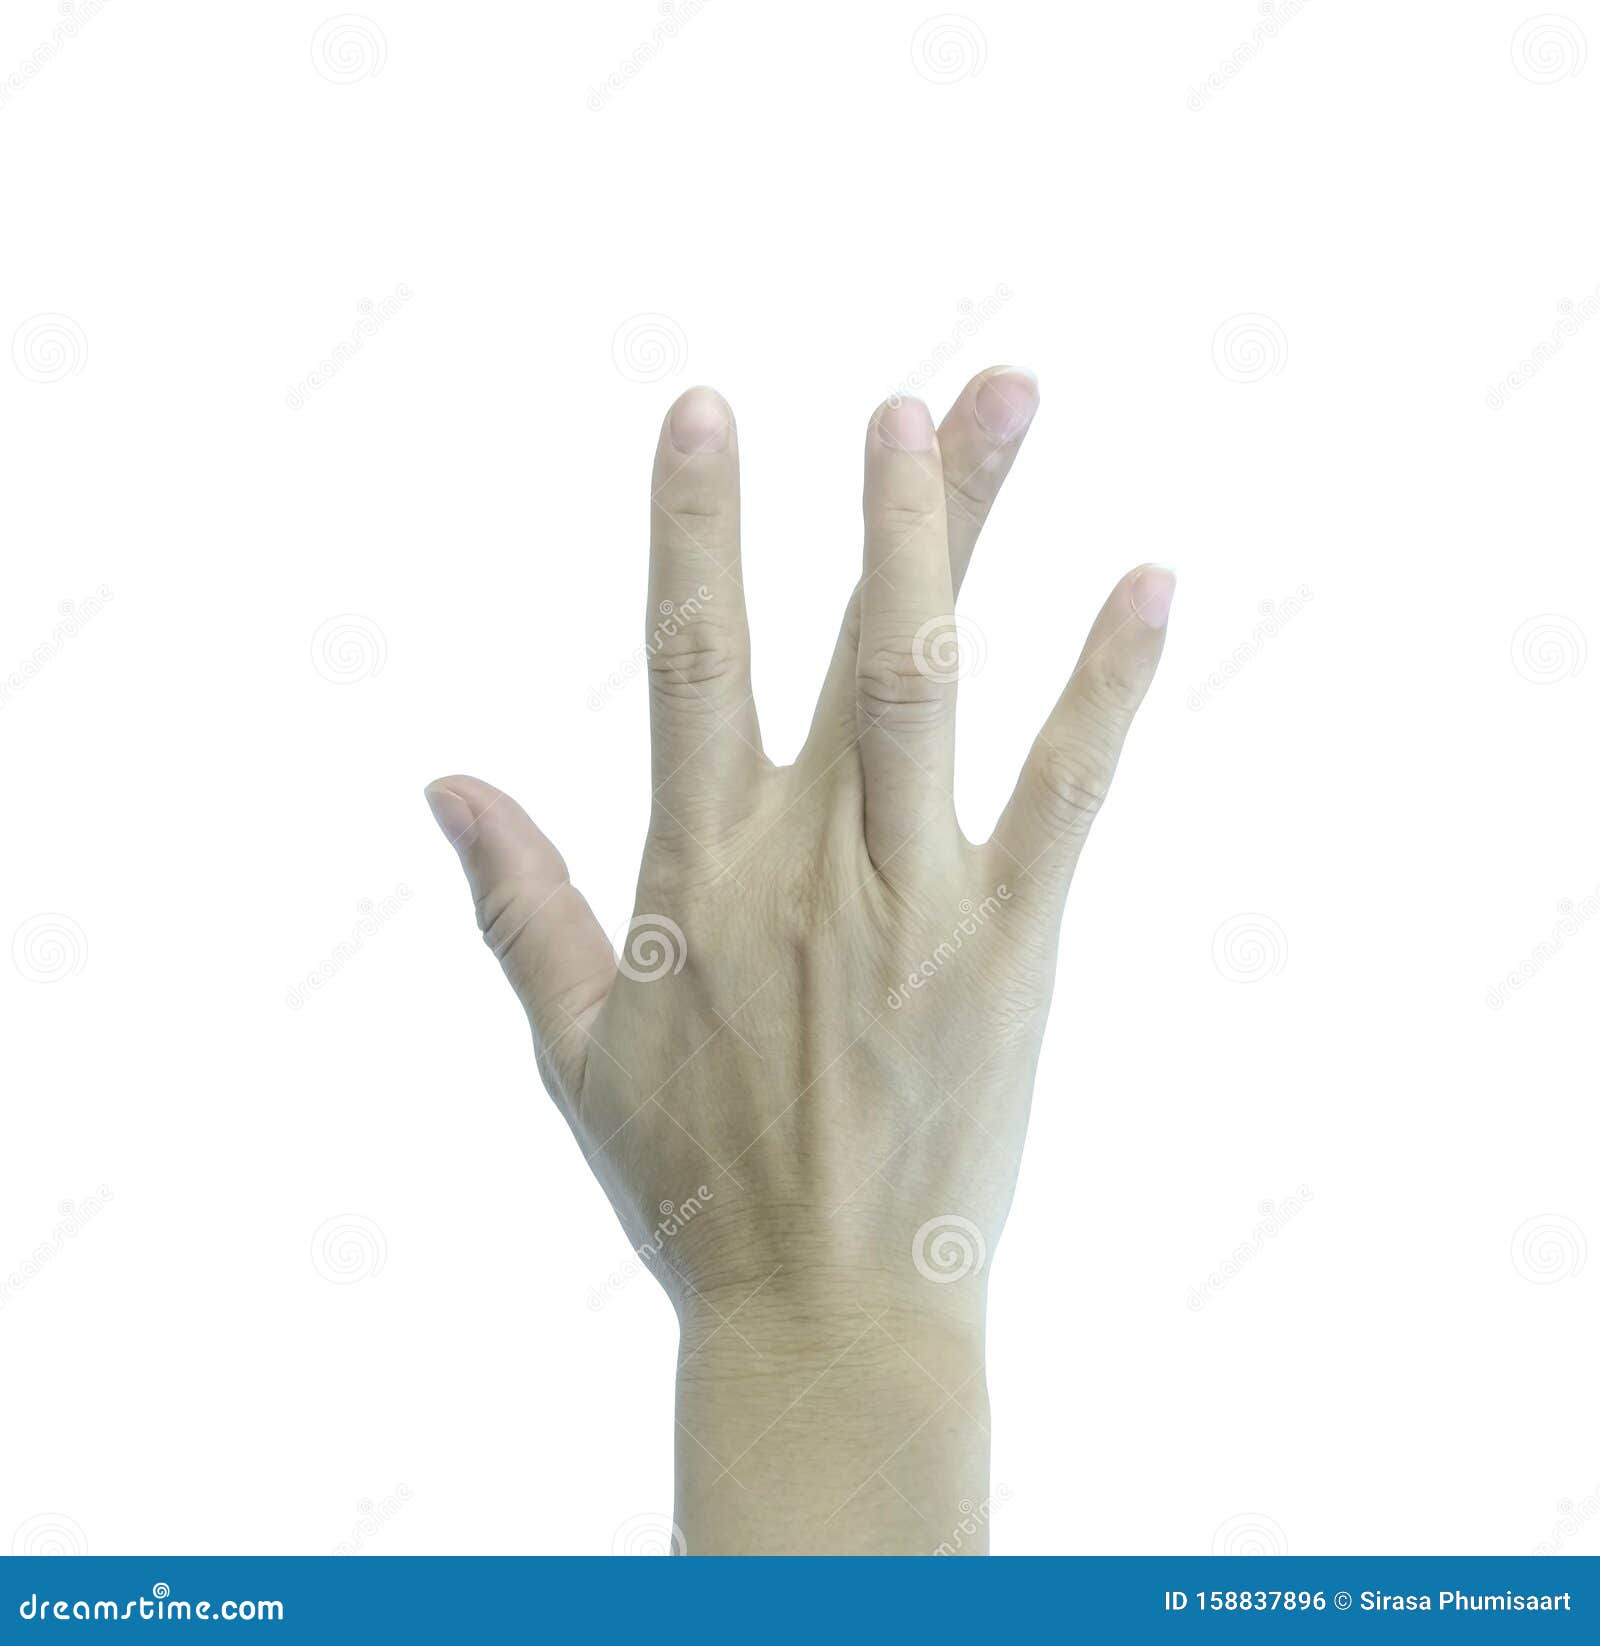 Congenital Hand Differences | Johns Hopkins Medicine